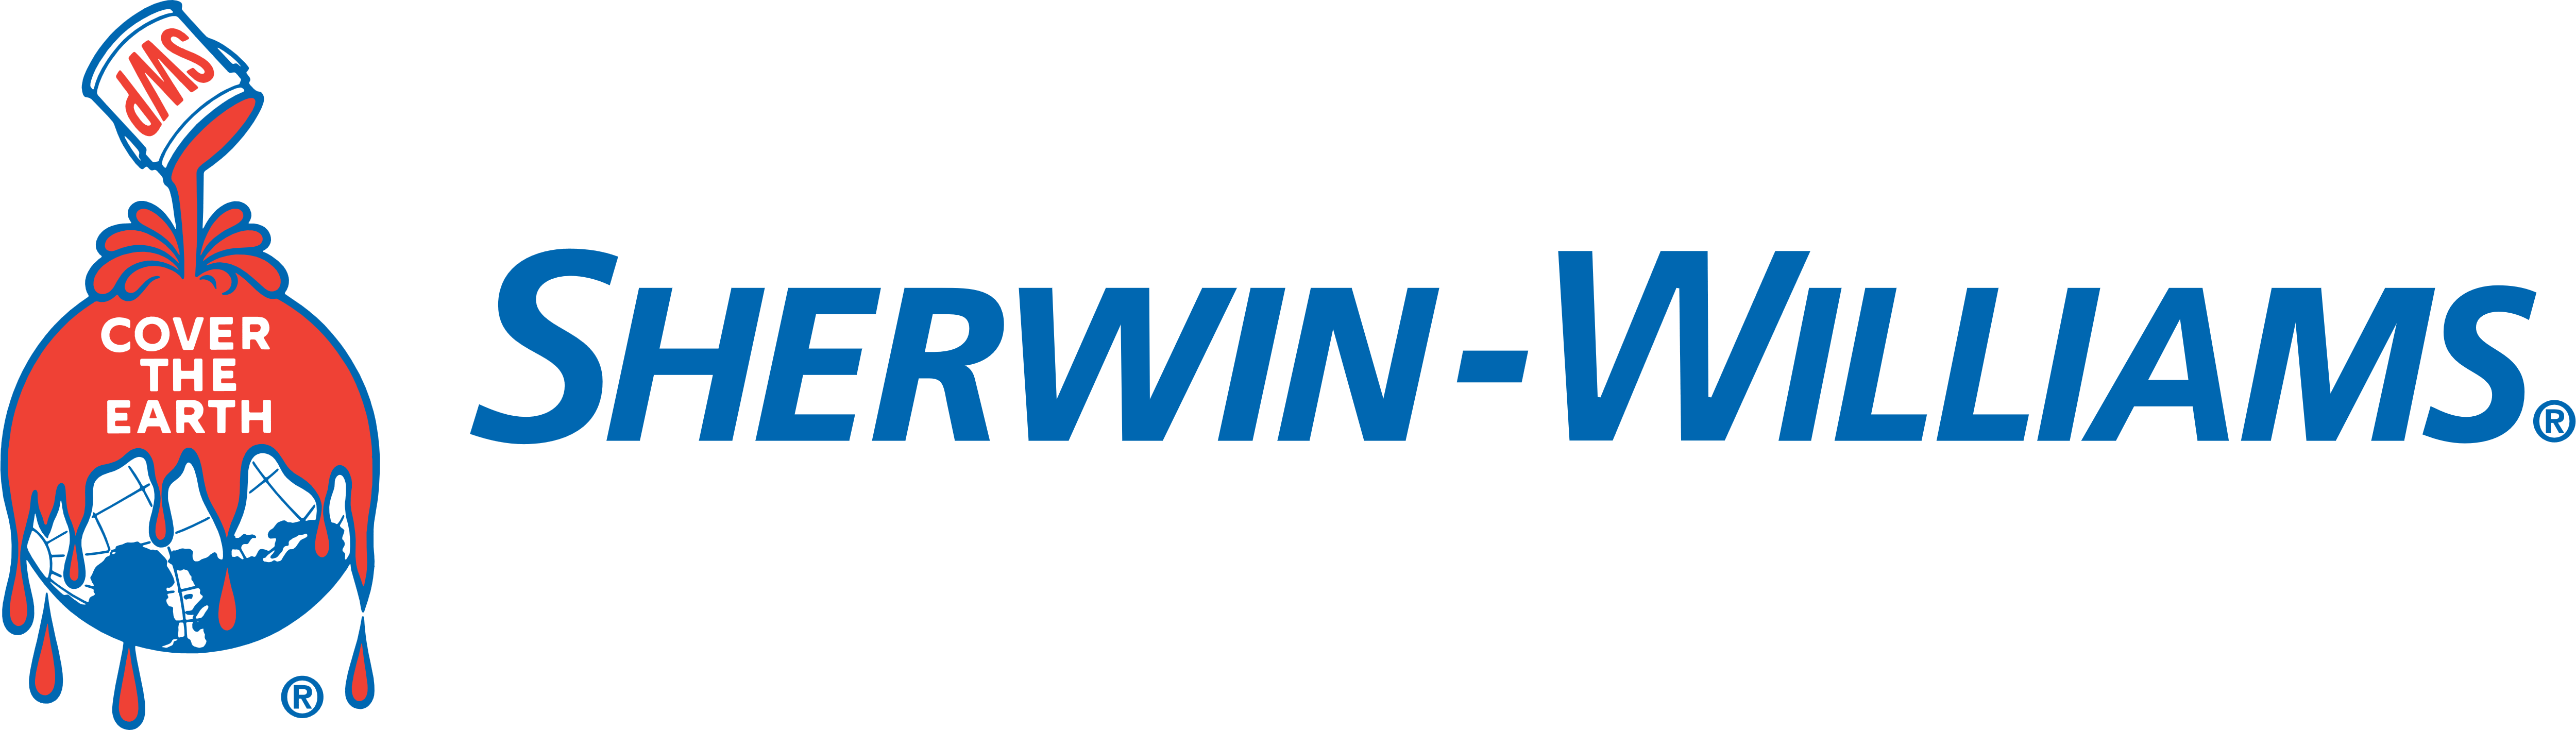 Sherwin Williams  About Sherwin Williams logo wordmark